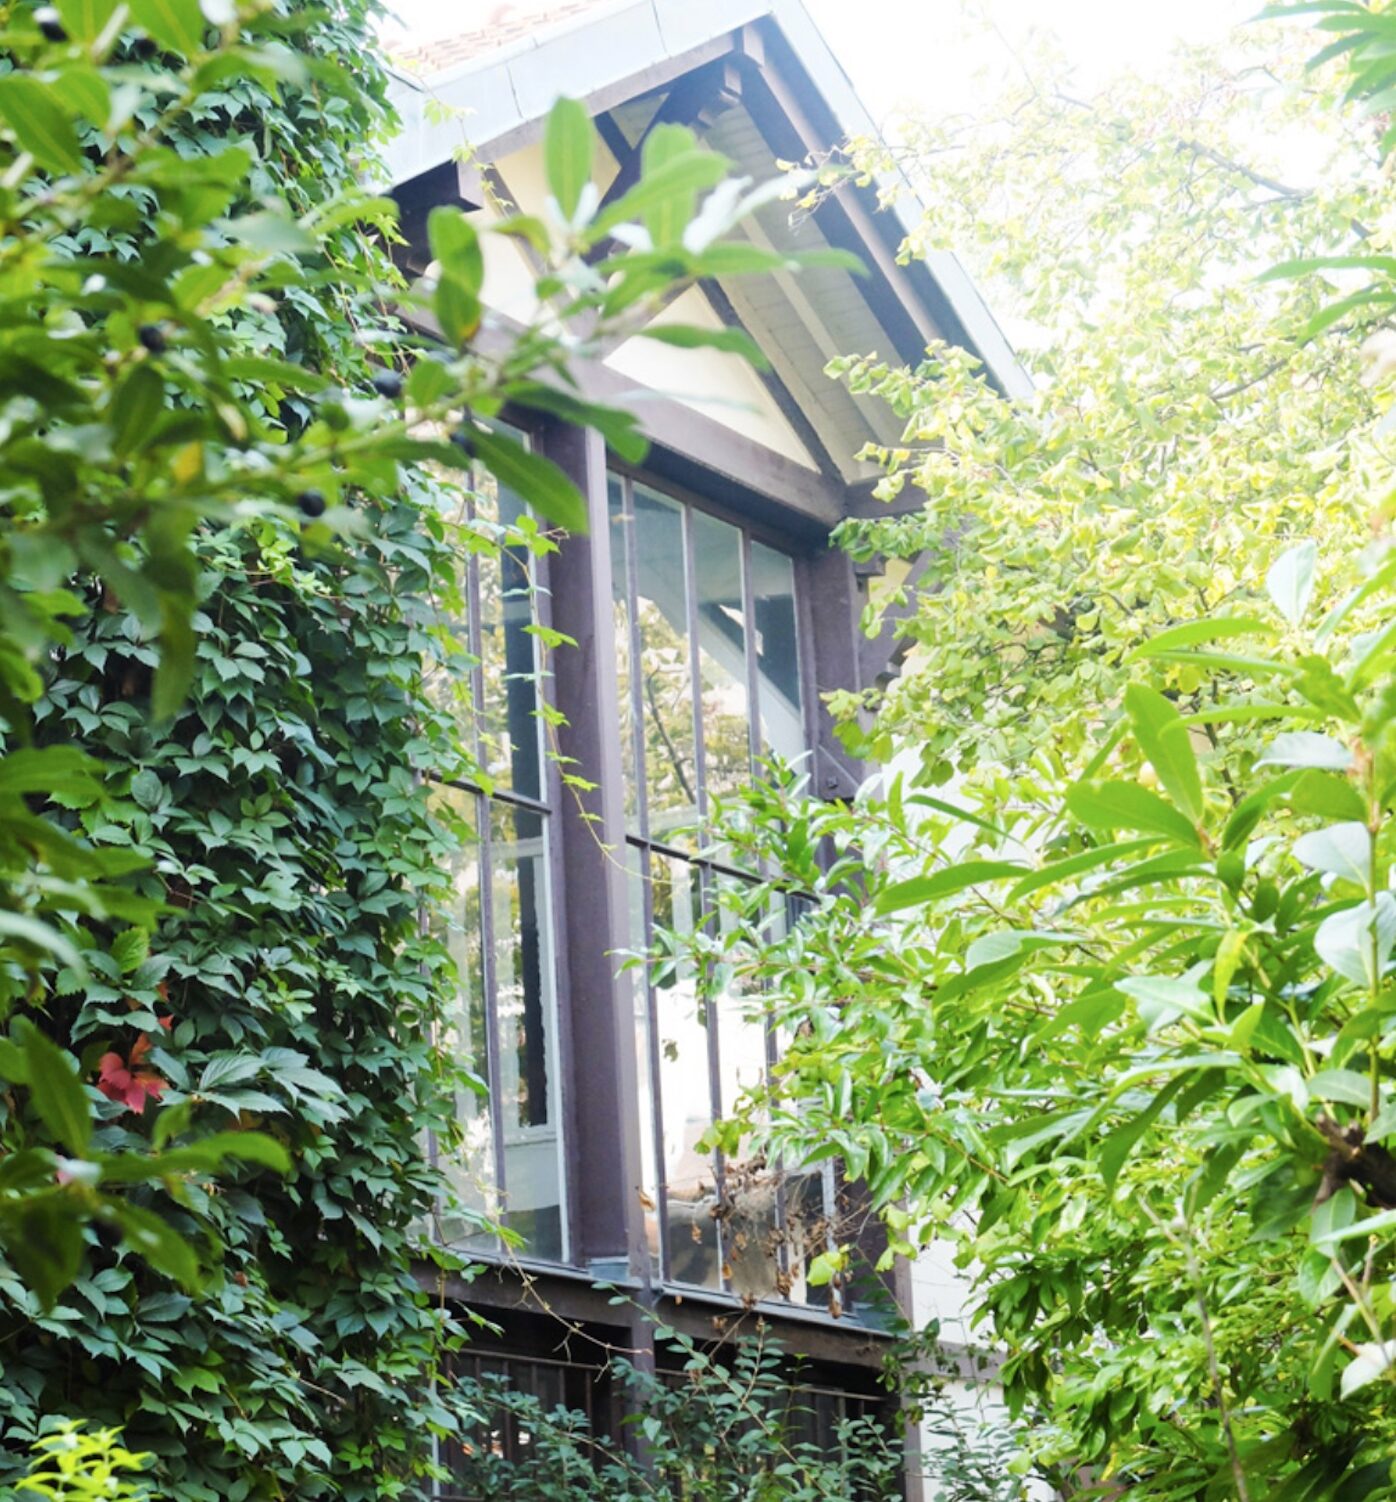 maison atelier artiste chalet bois marron blanc jardin fleuri